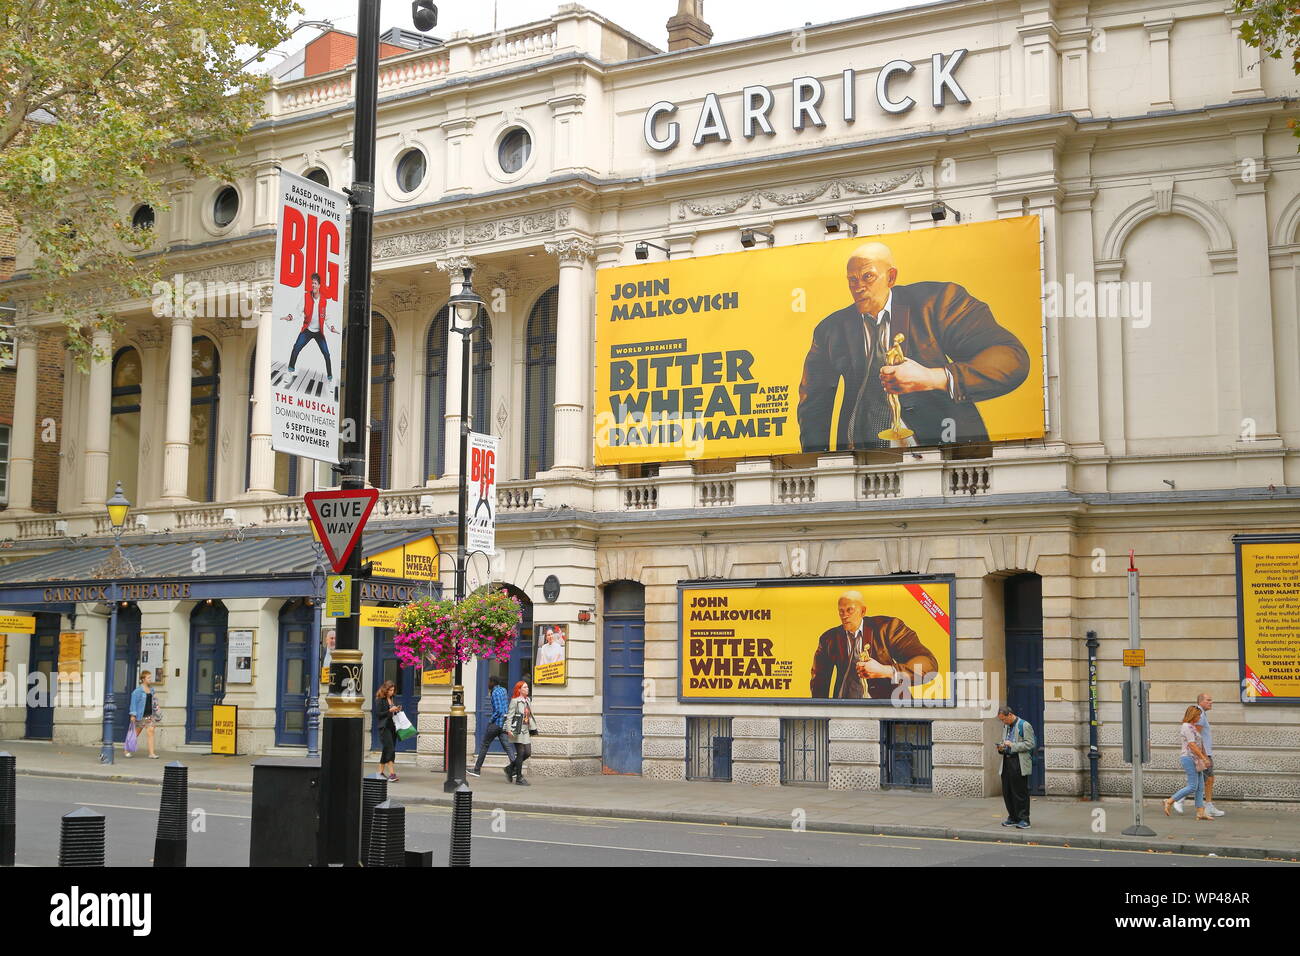 The front of the Garrick Theatre near Trafalgar Square, London, UK Stock Photo